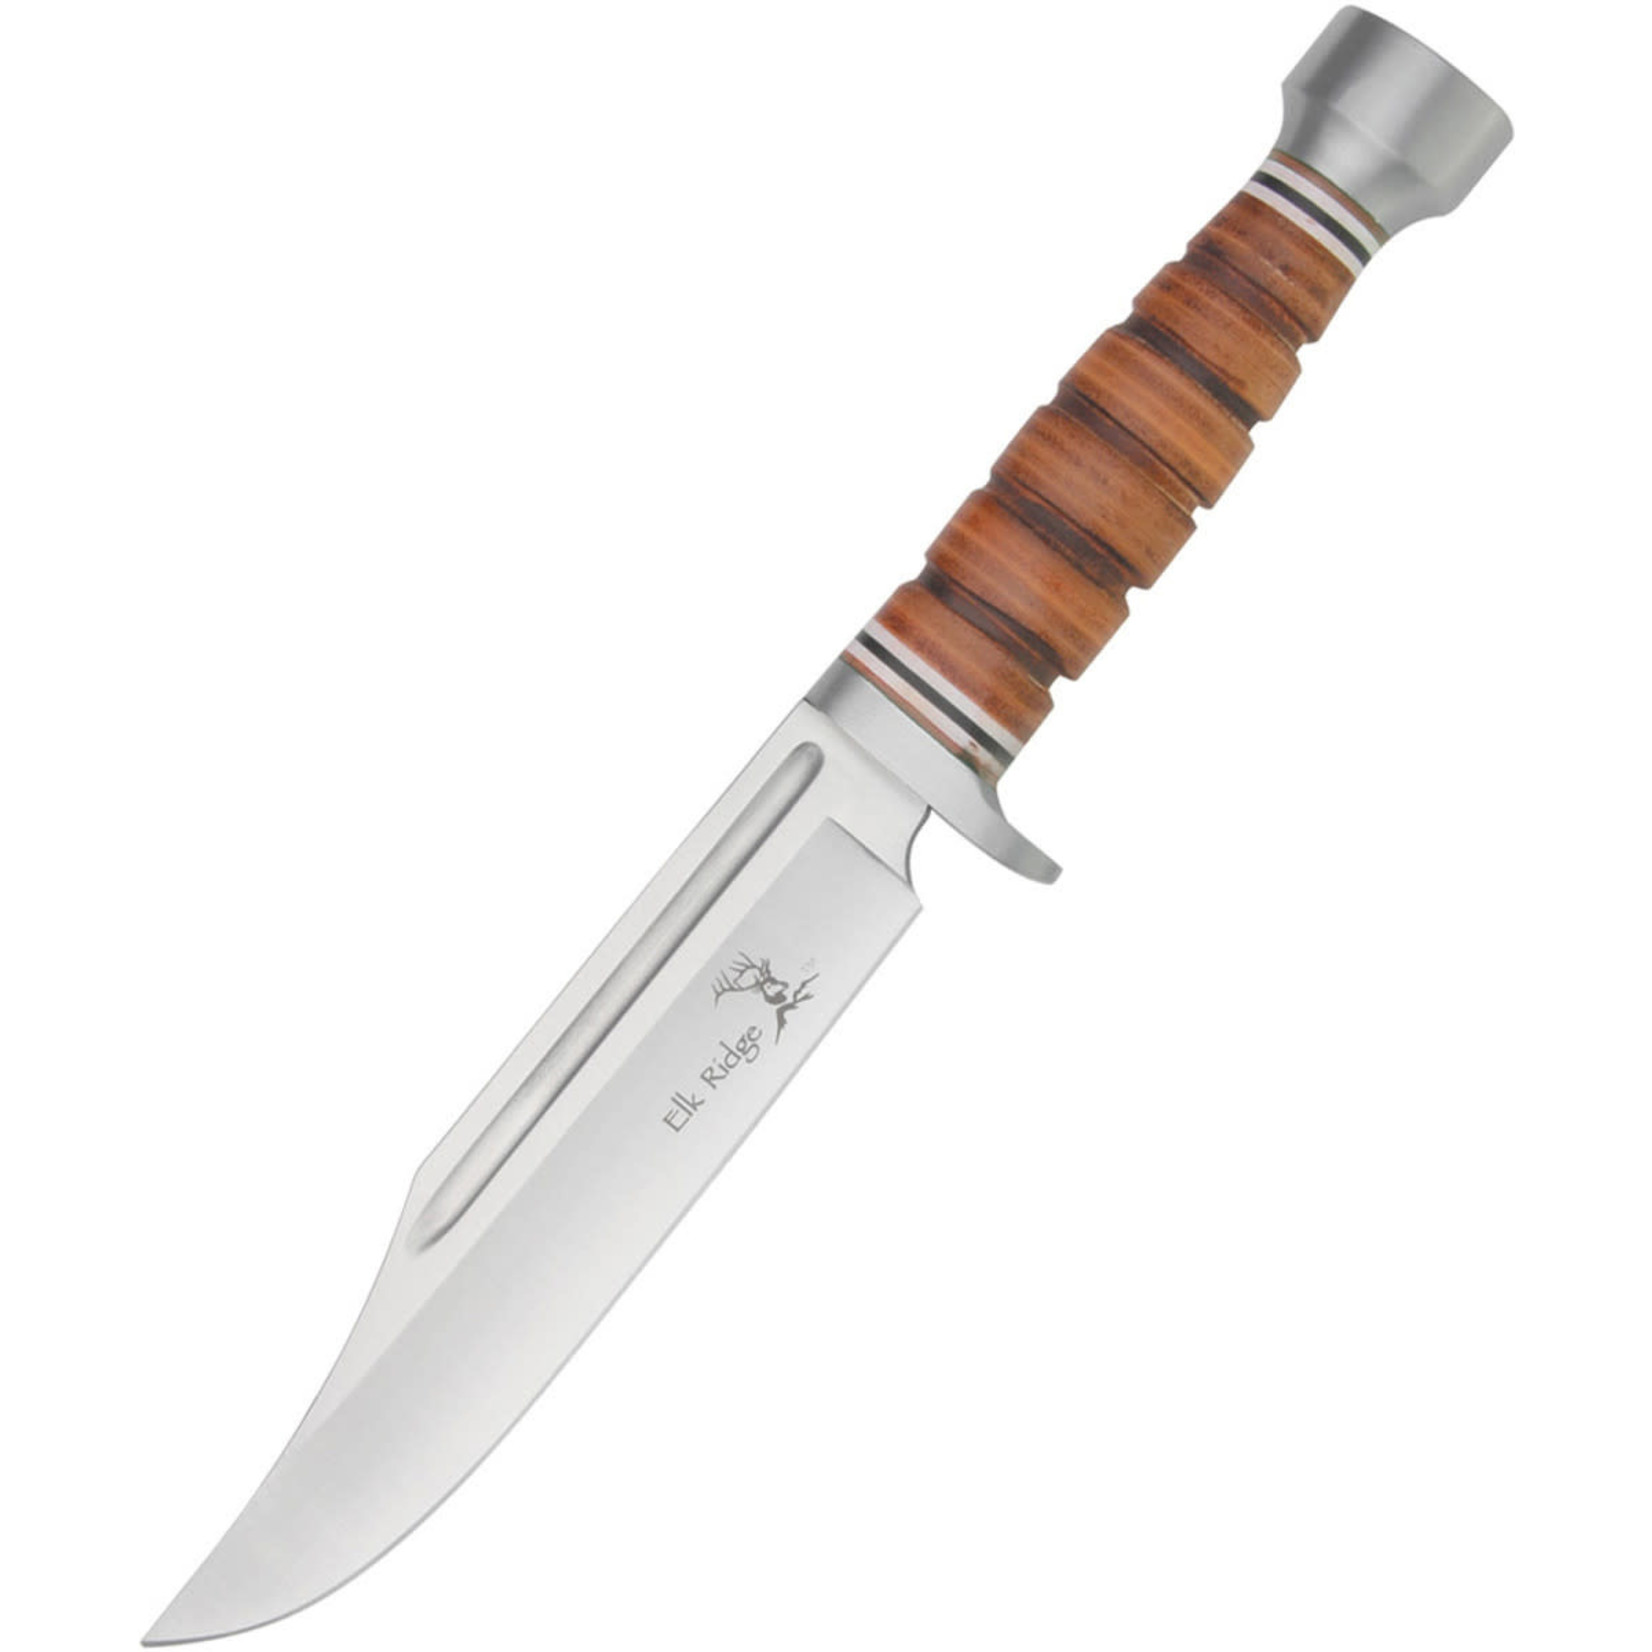 Elk Ridge Elk Ridge Bowie Knife 6.75inch Blade Stack Leather Handle Leather Sheath